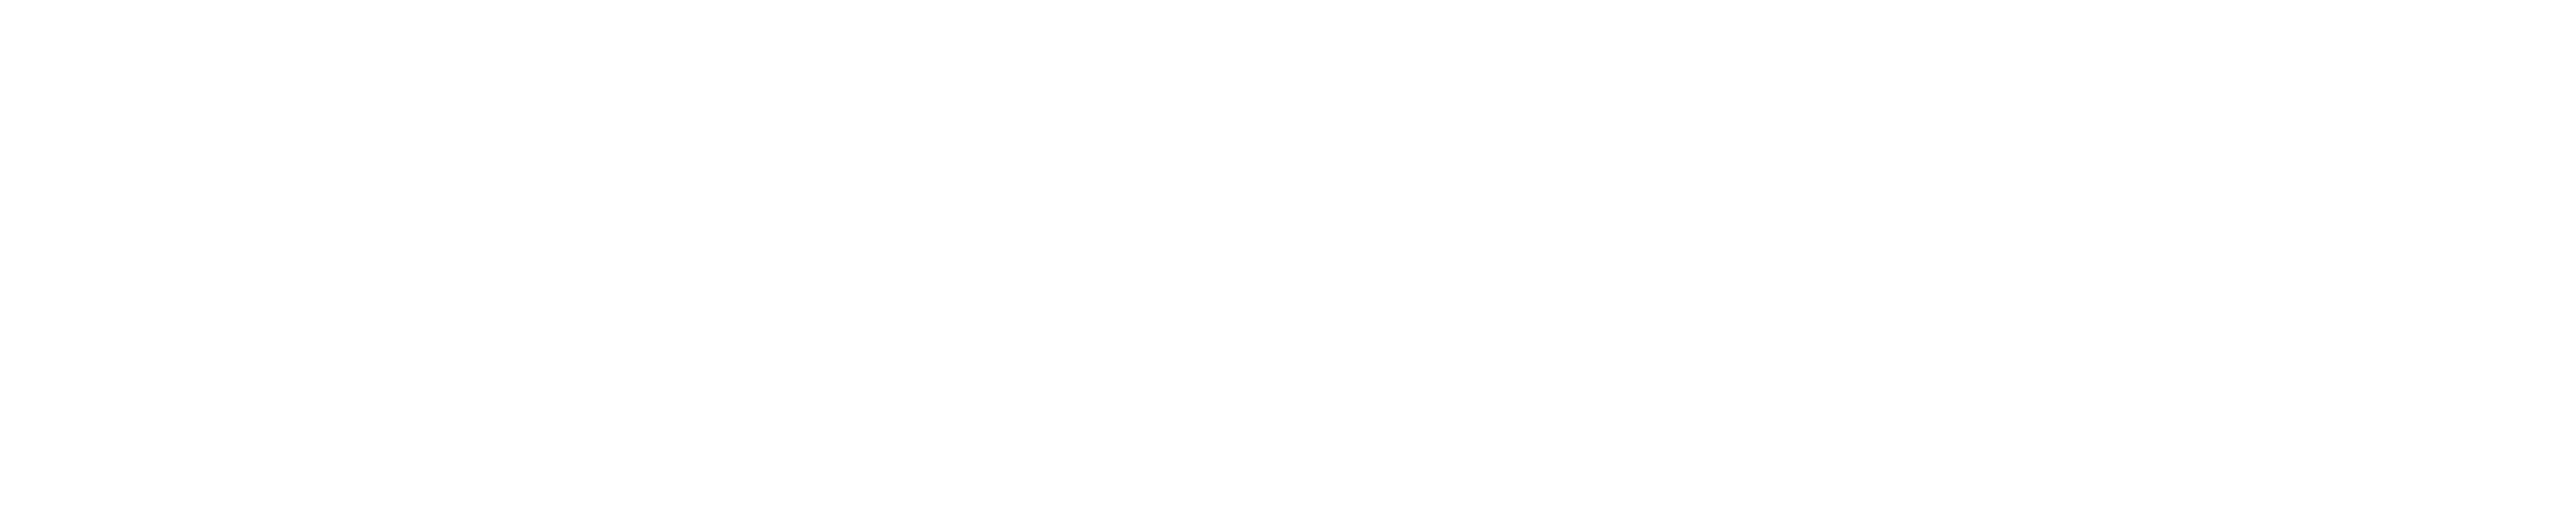 Infernal Affairs II logo